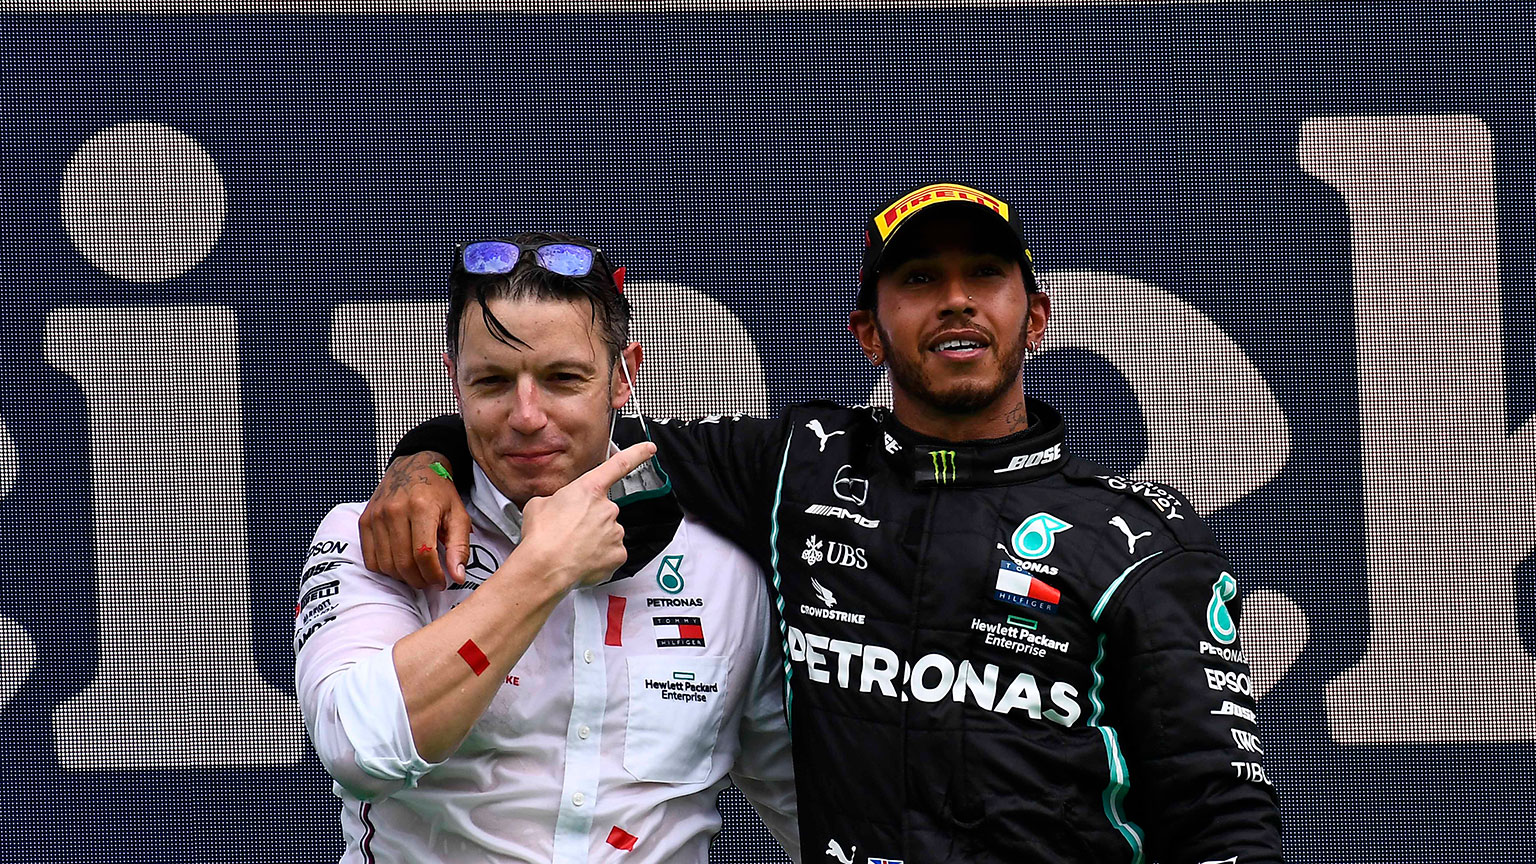 Hamilton and engineer Bonnington on the podium